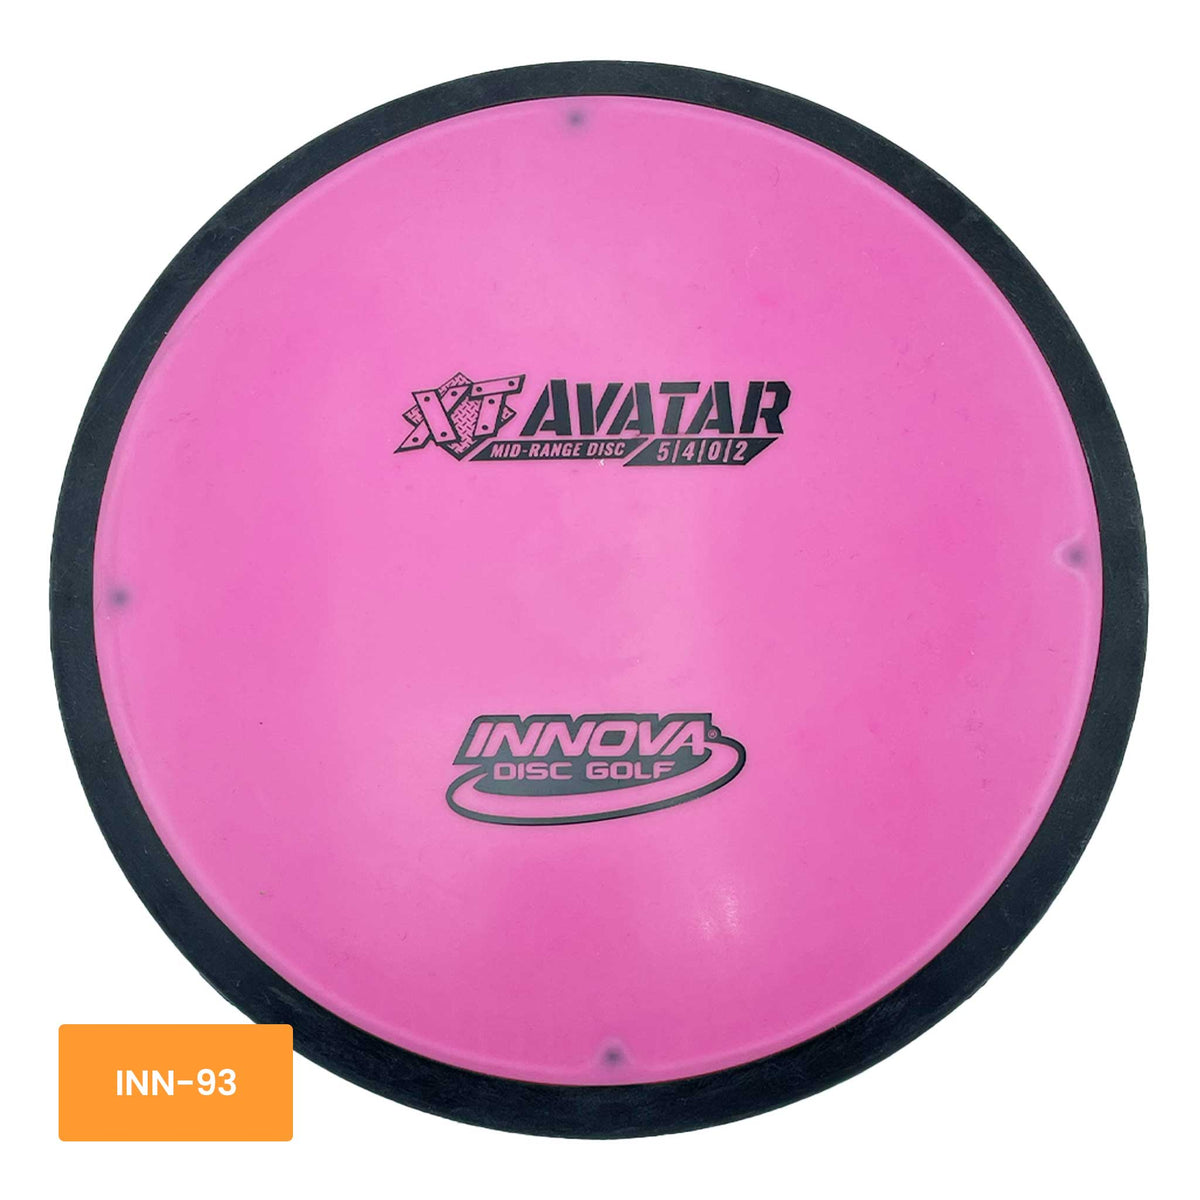 Innova Disc Golf XT Avatar midrange driver - Pink